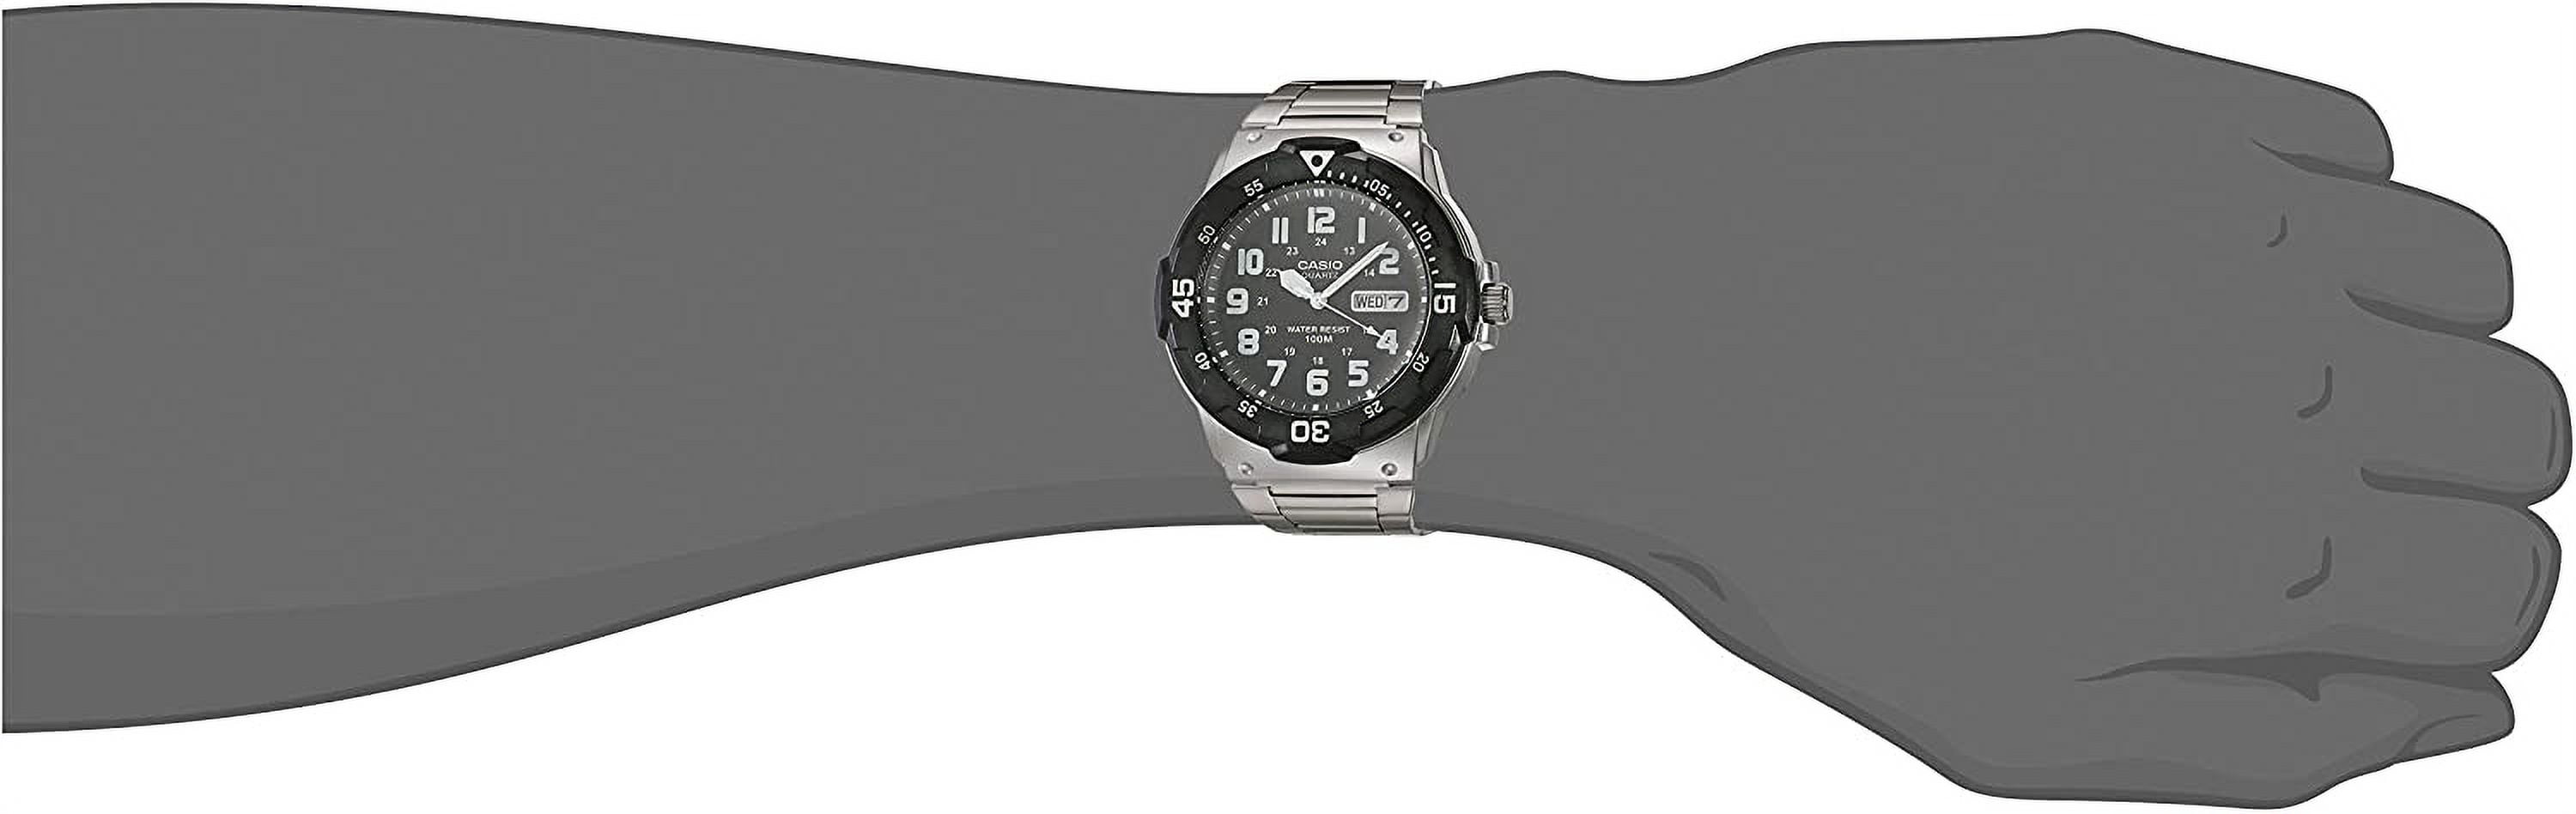 Bracelet Watch Band MRW200HD-1BV Analog with Casio